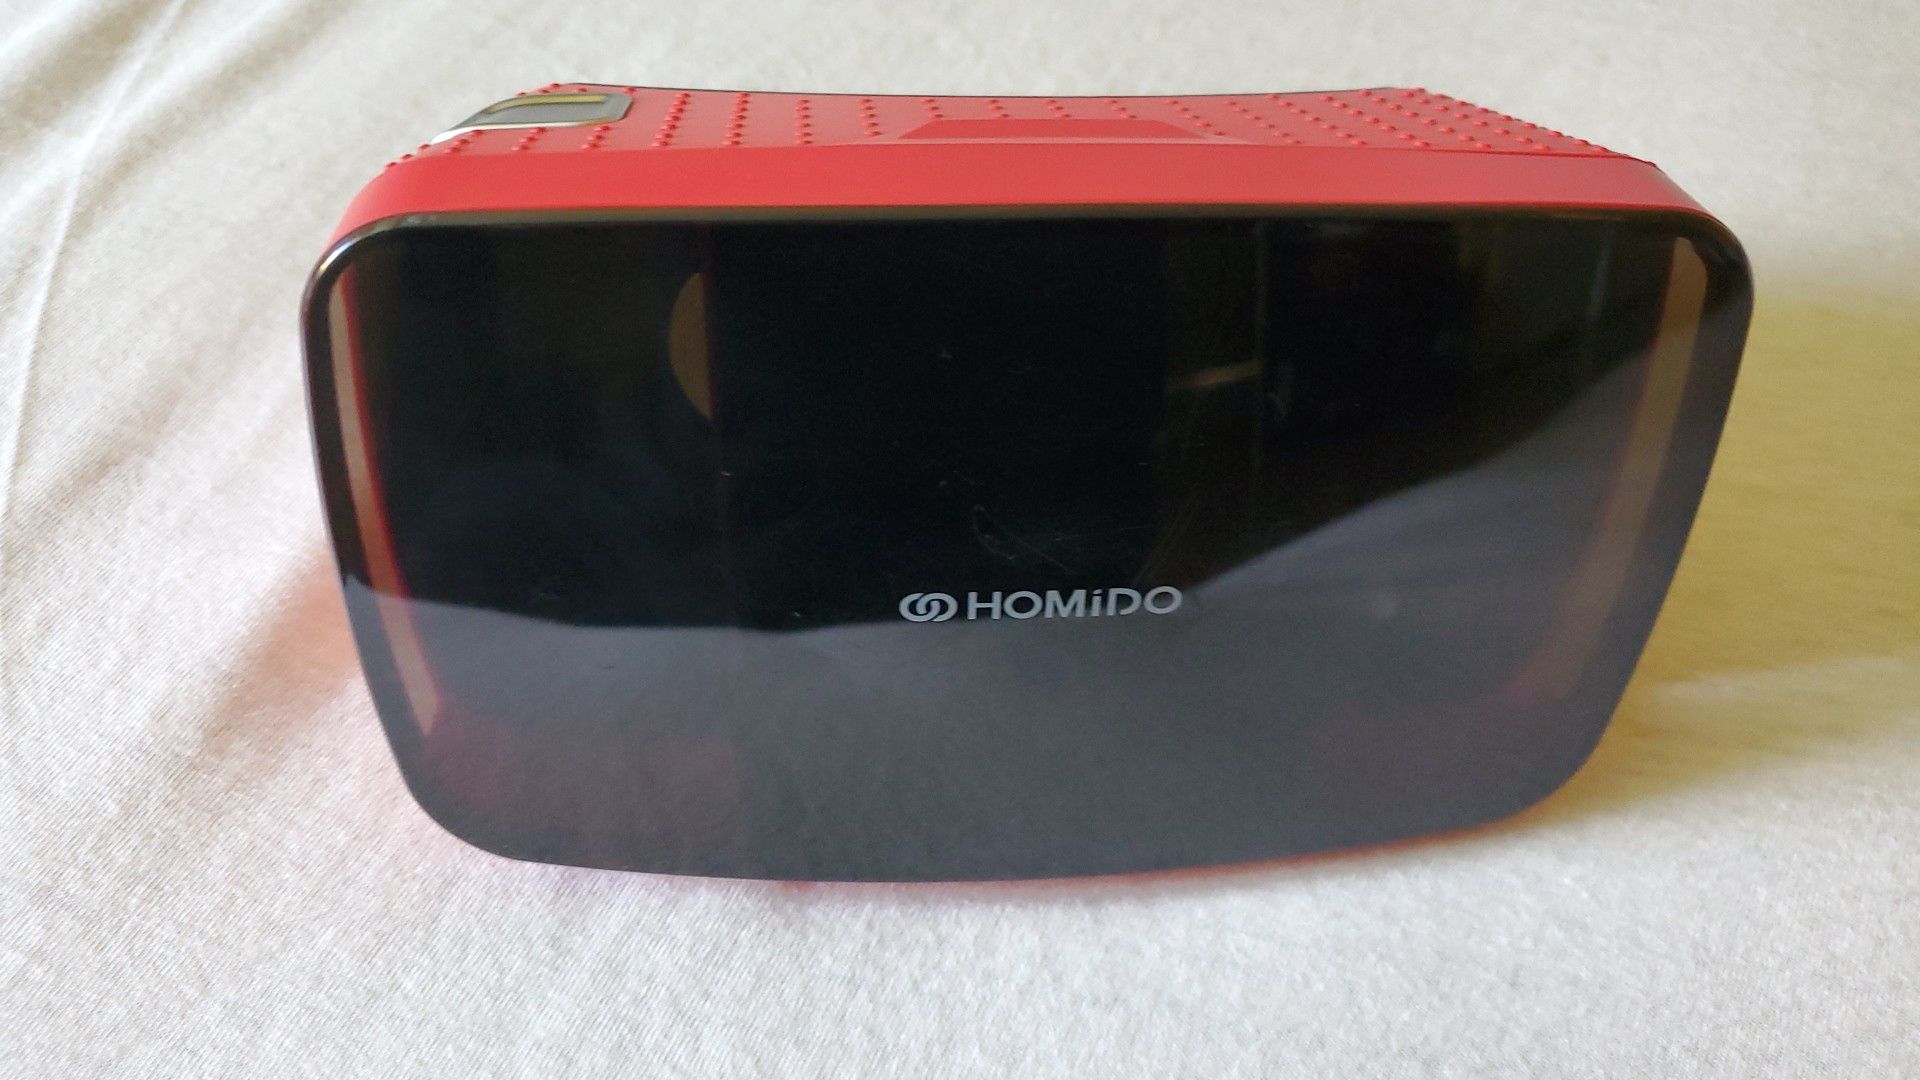 Homido Grab 3D Virtual Reality Headset